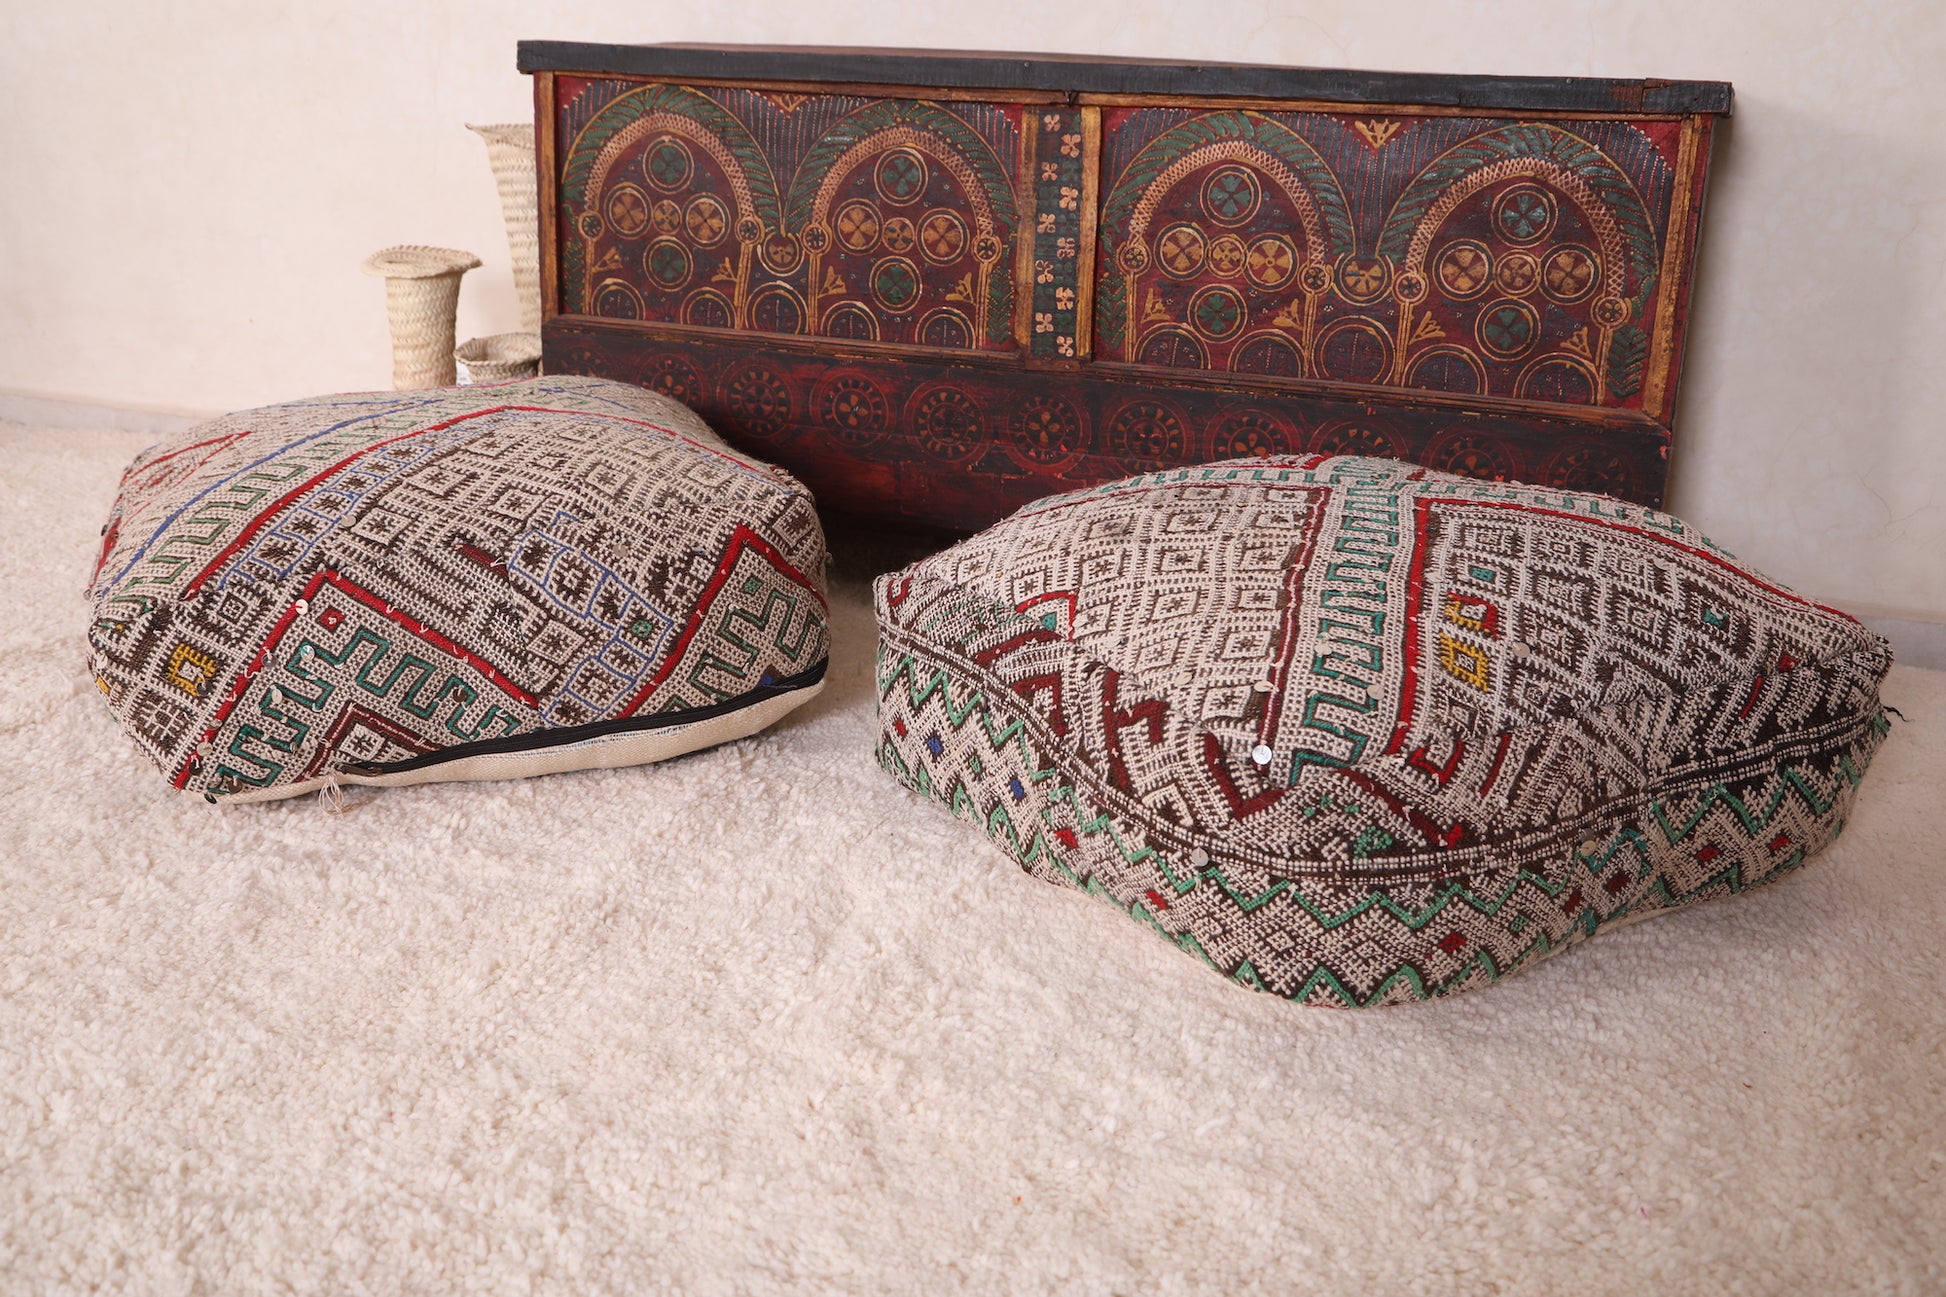 Two Vintage Ottoman Poufs for sale